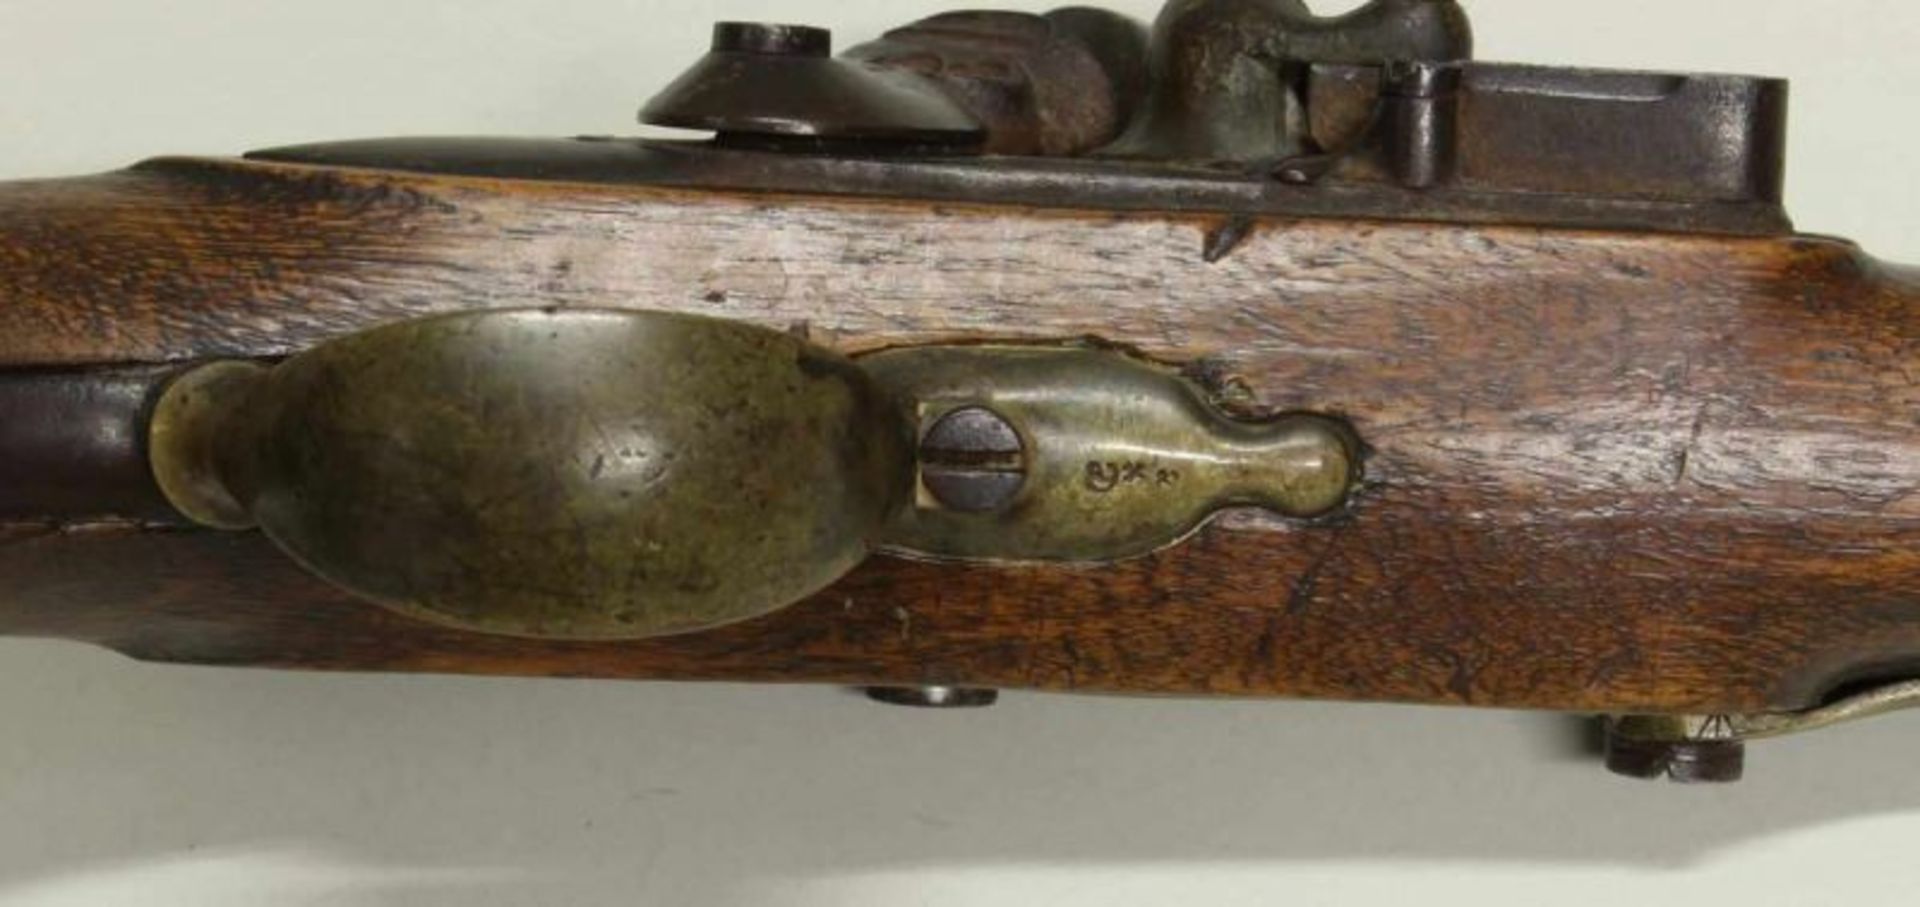 Steinschloss-Pistole, französische Kavallerie, datiert 1813, auf dem Schloss signiert Mauberge - Image 5 of 5